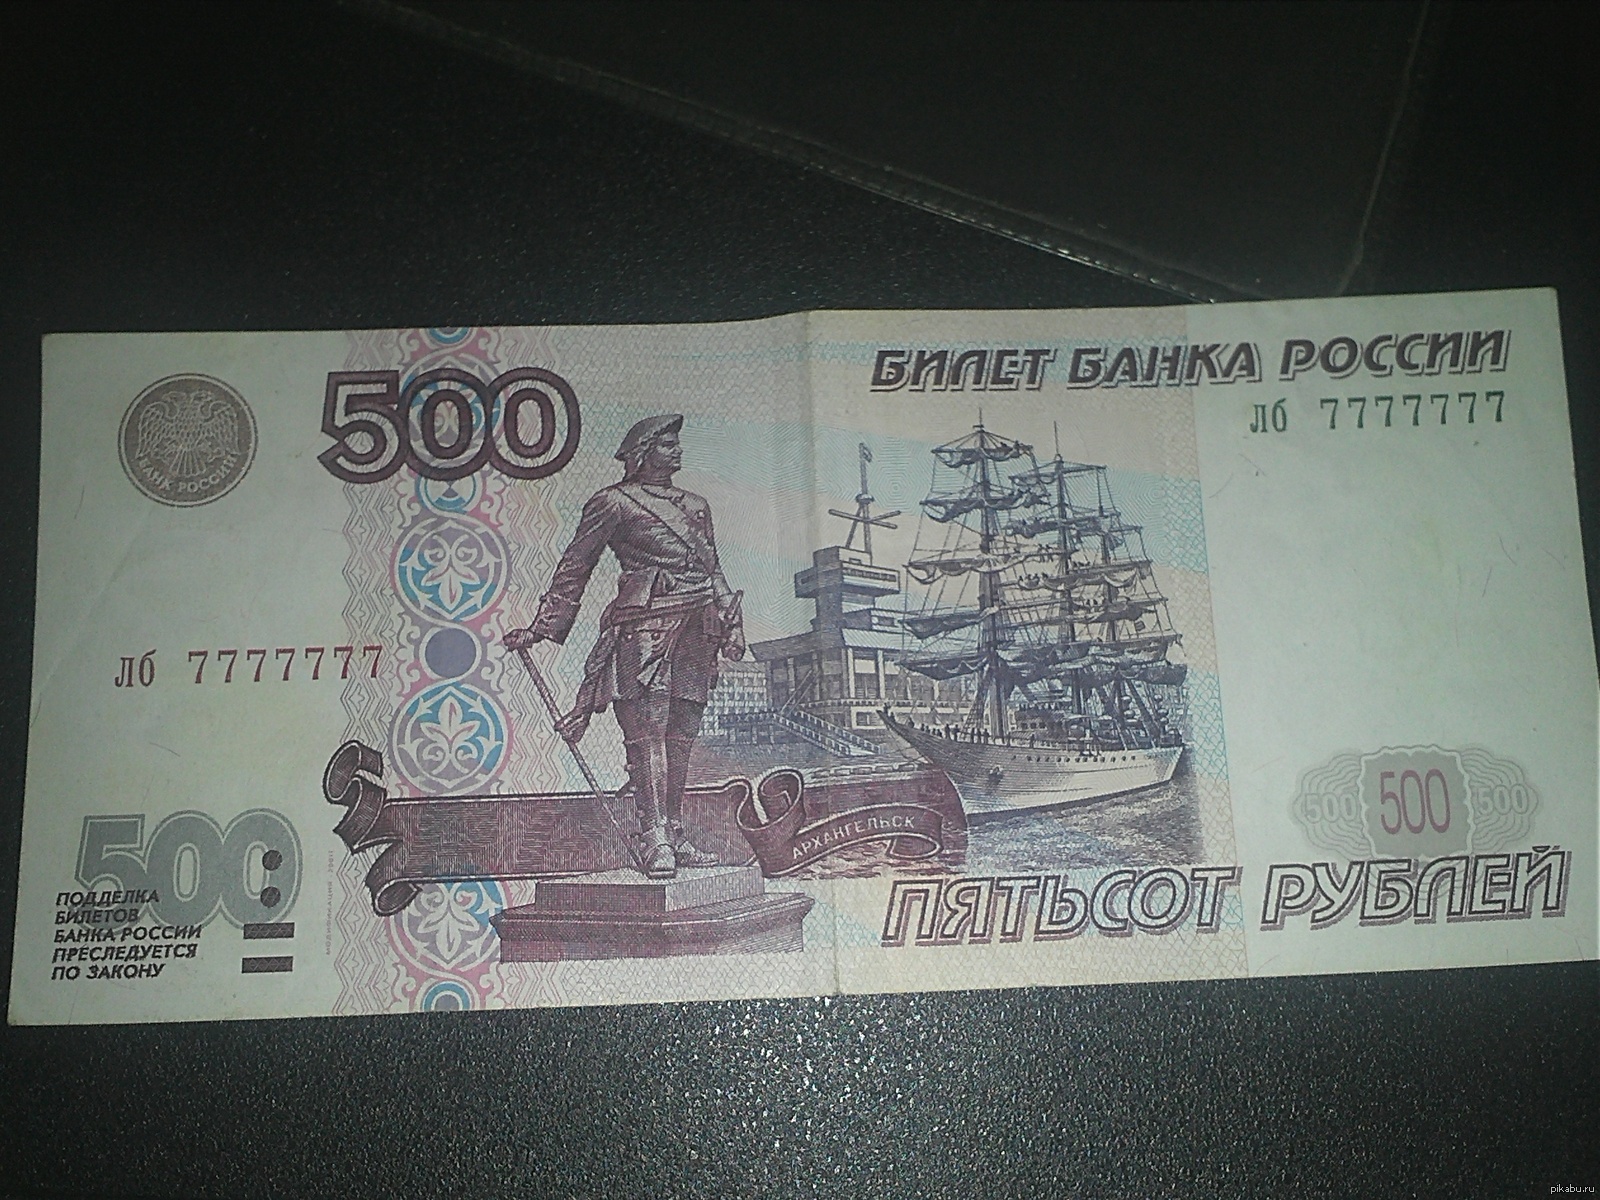 500 рублей хватит